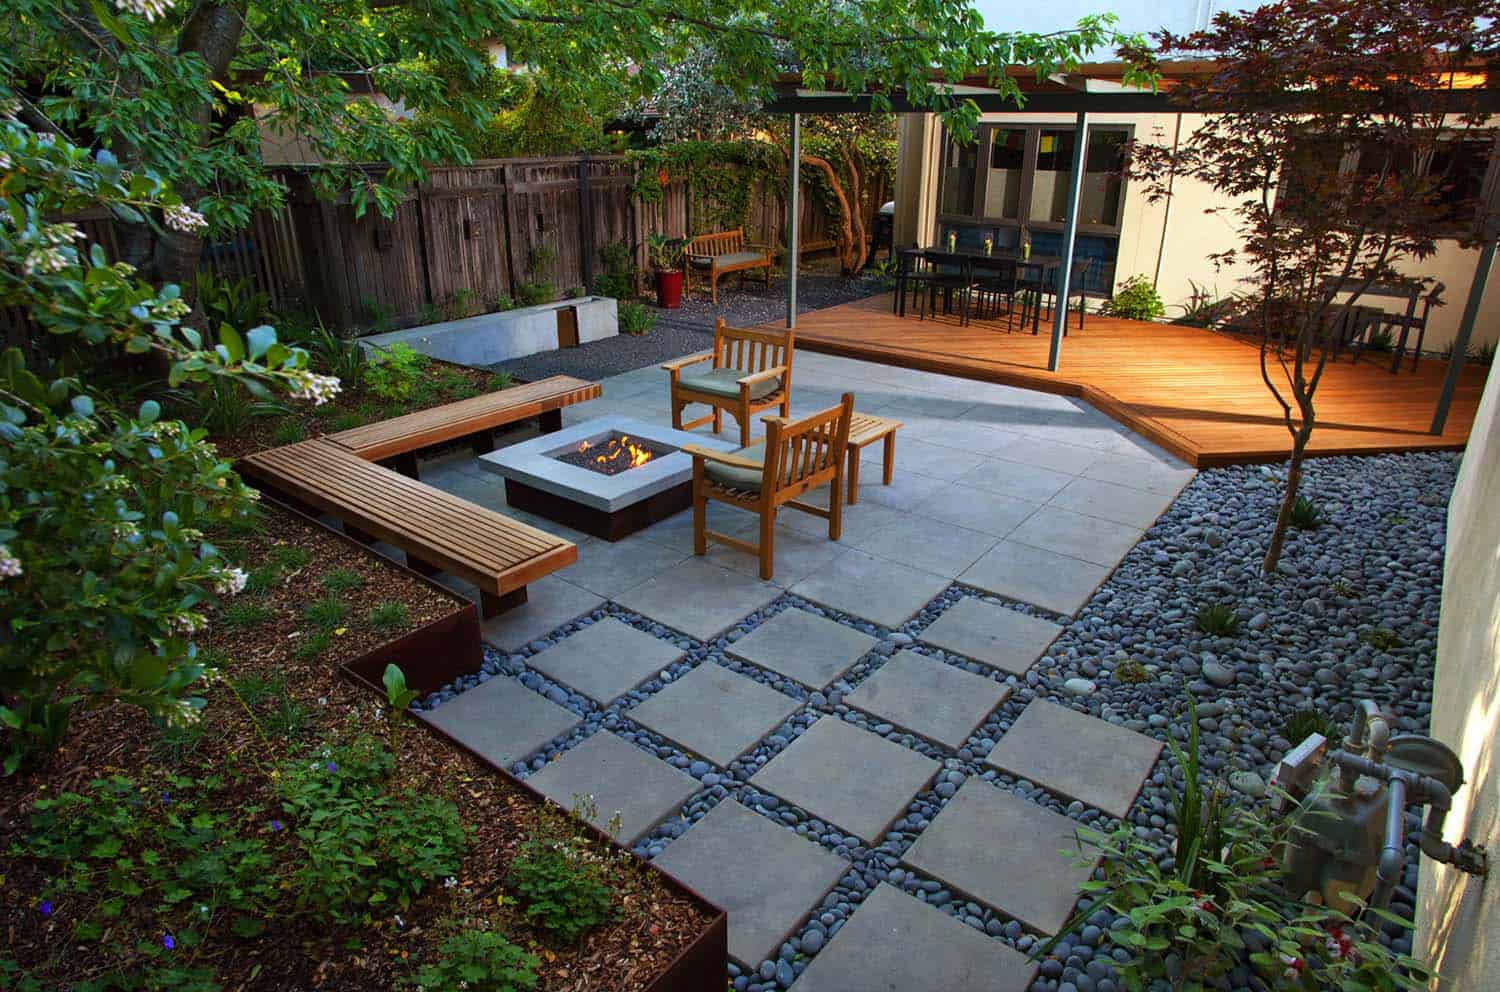 28 Inspiring Fire Pit Ideas To Create A Fabulous Backyard Oasis